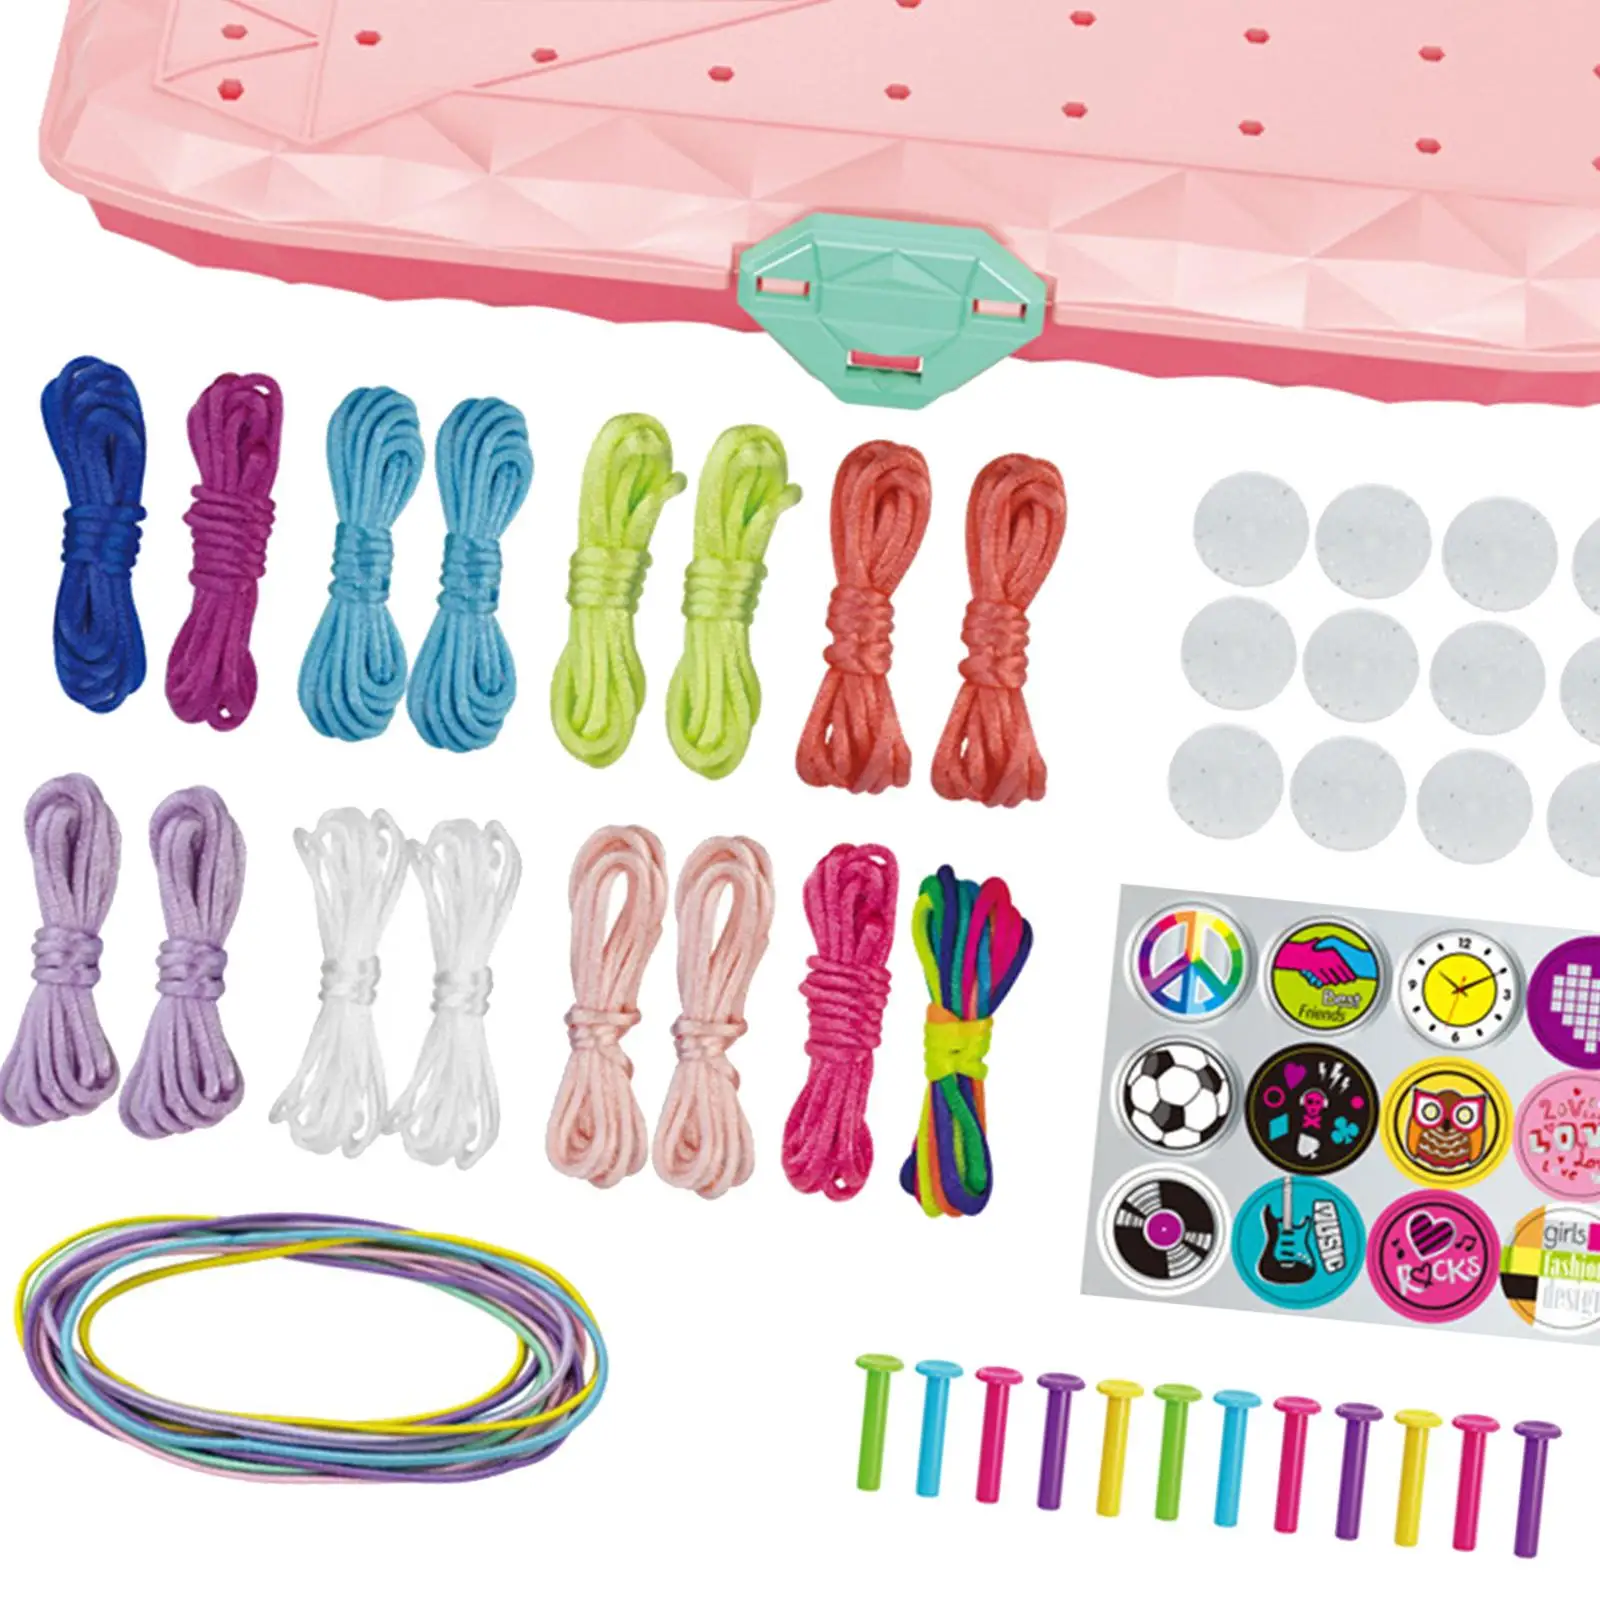 Bracelet Making Kit Elastic Rope Braiding Loom Multicolored Braiding Rope Bracelet Kit Jewelry Kit for Beginners Adults Holidays